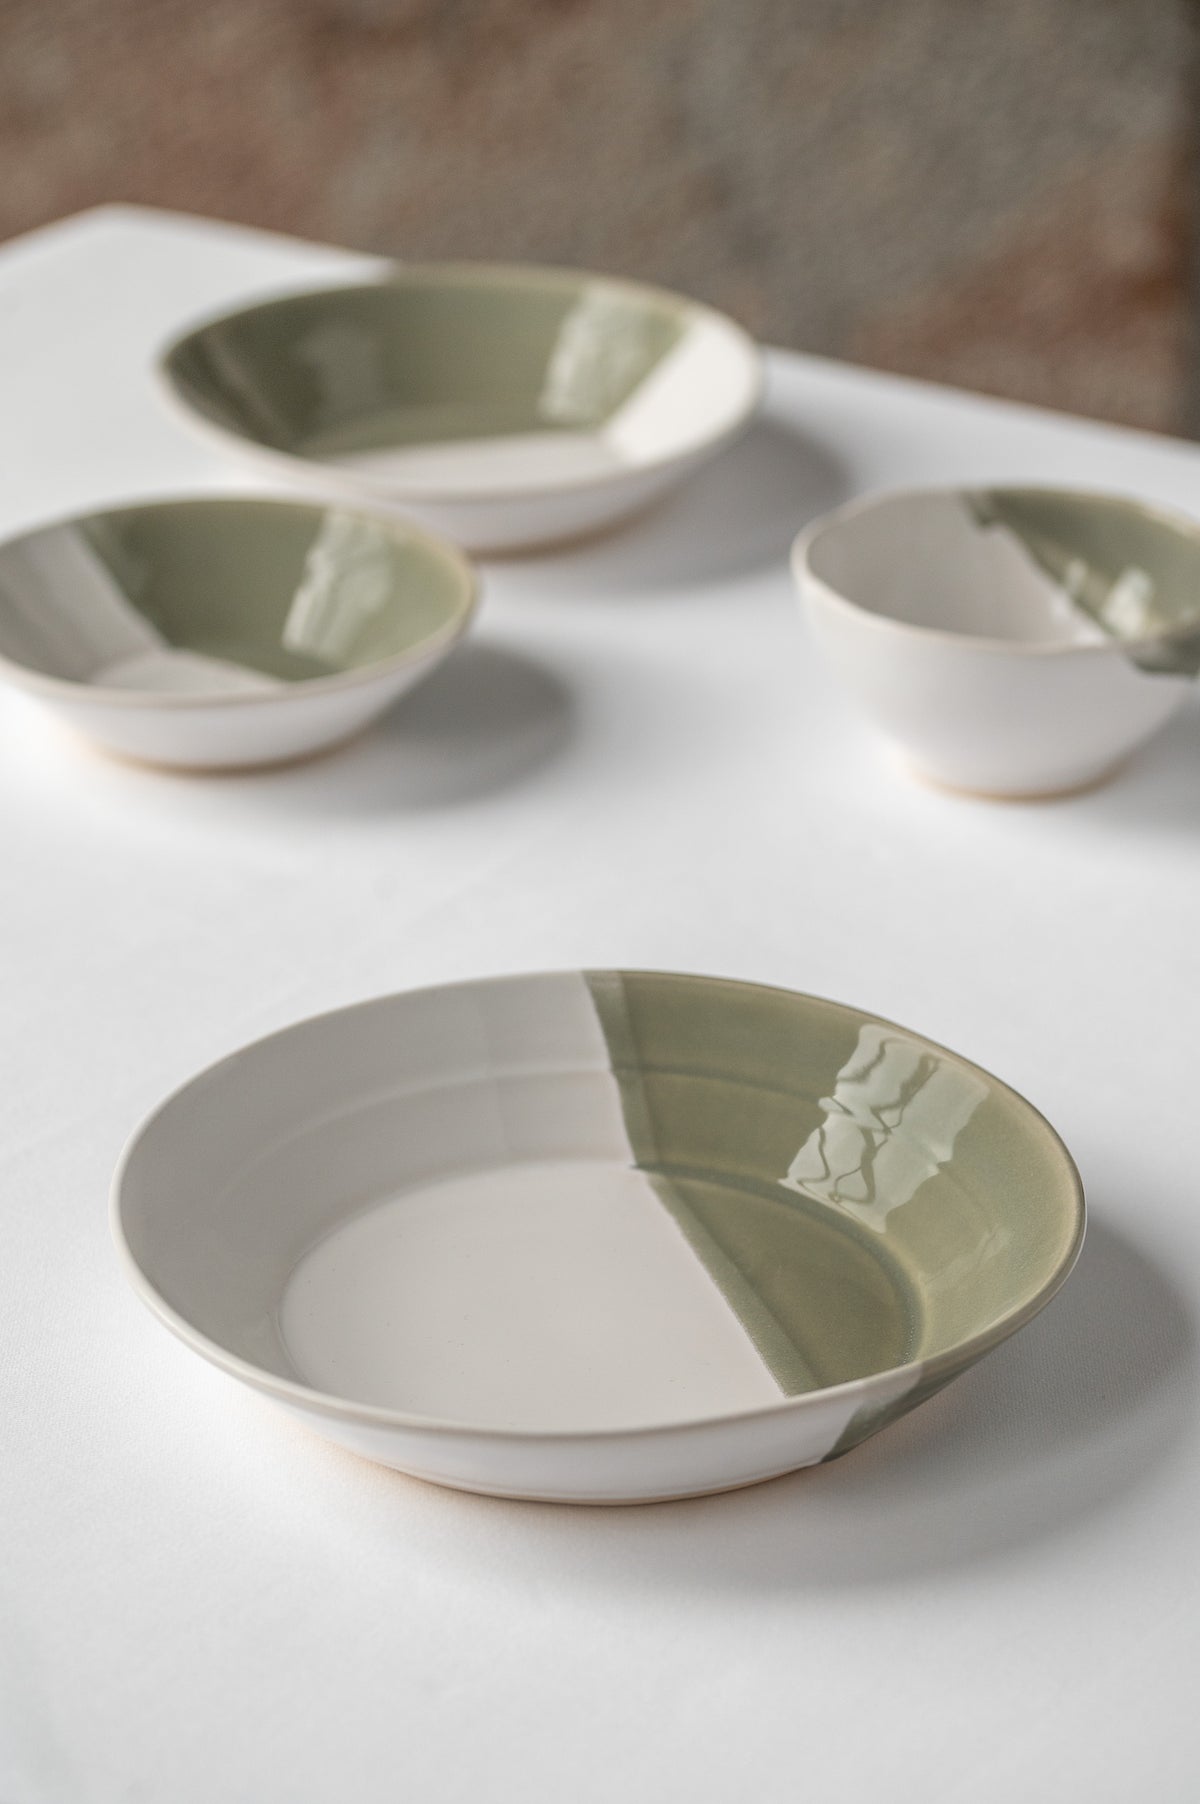 Adare Manor X Fiachra Crowley - Large Handmade stacking bowl